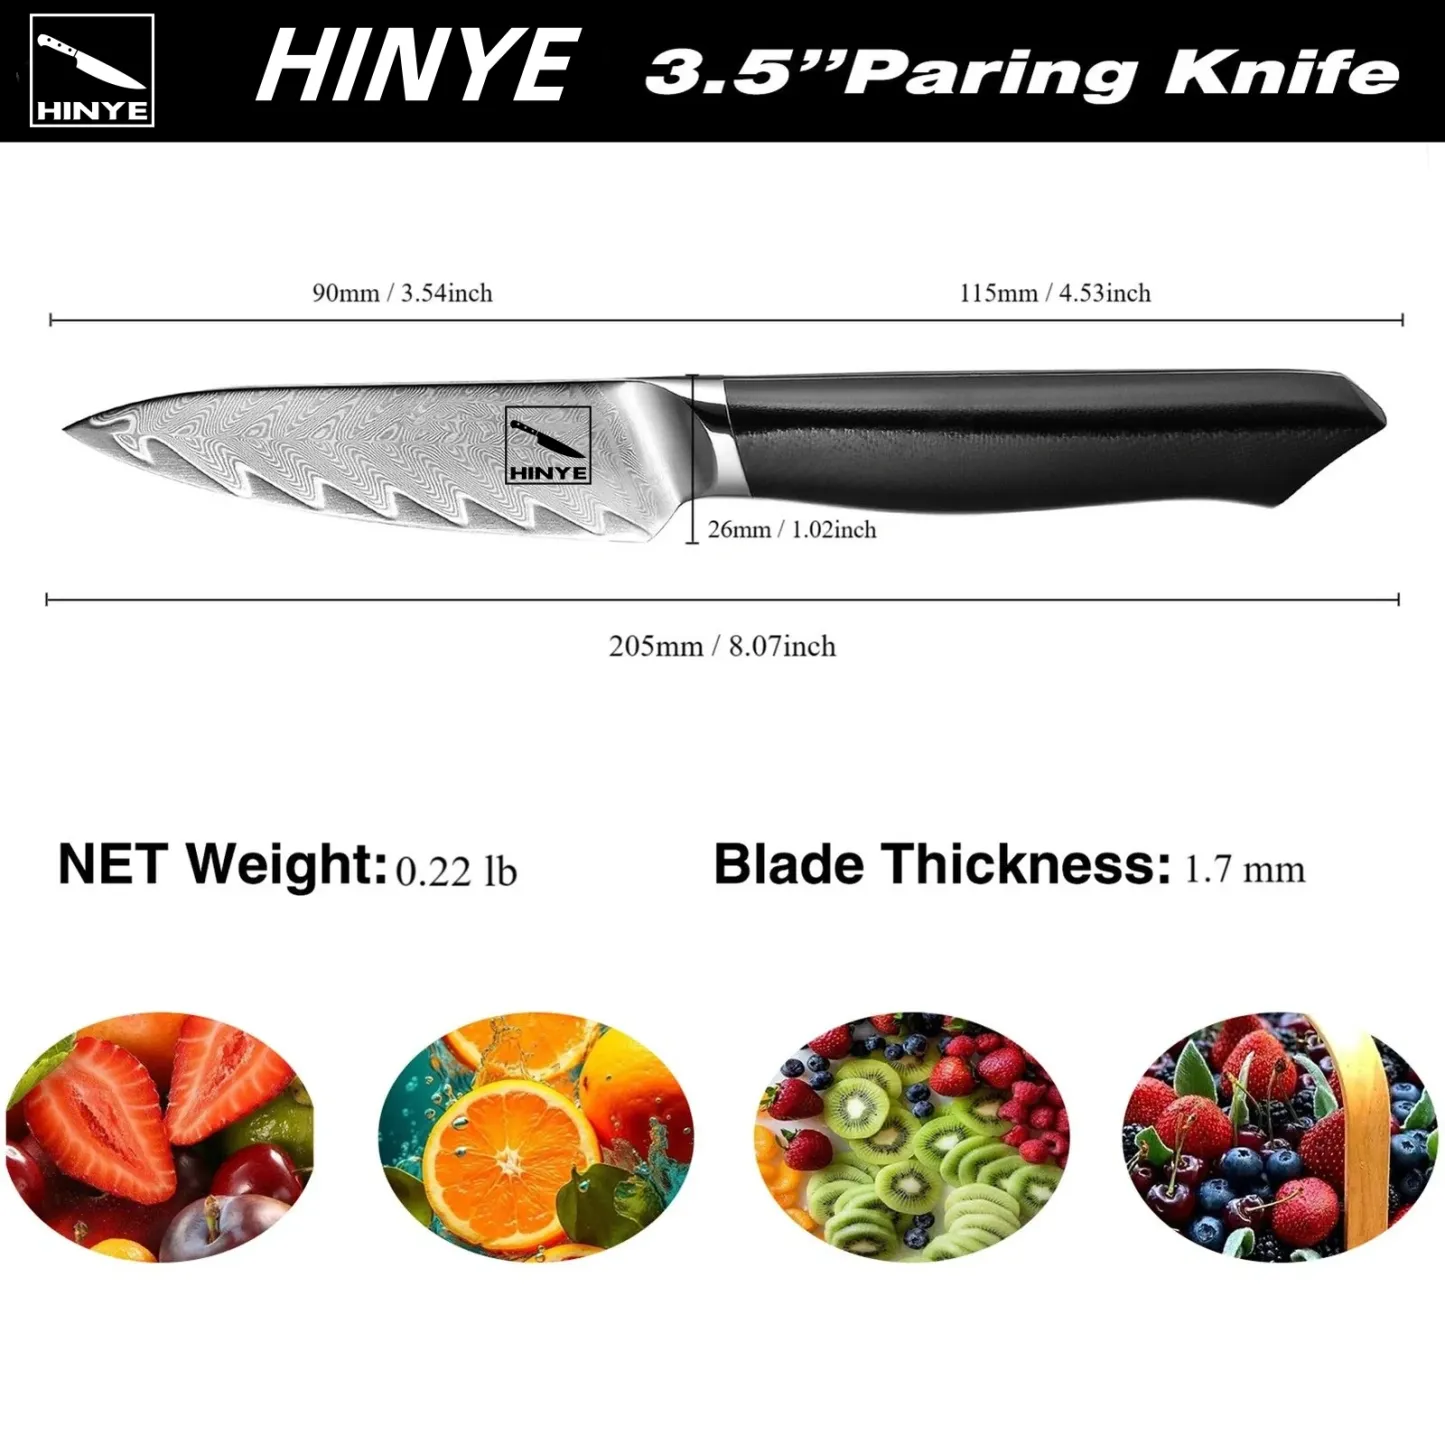 Hinye-Helix 3.5" Paring